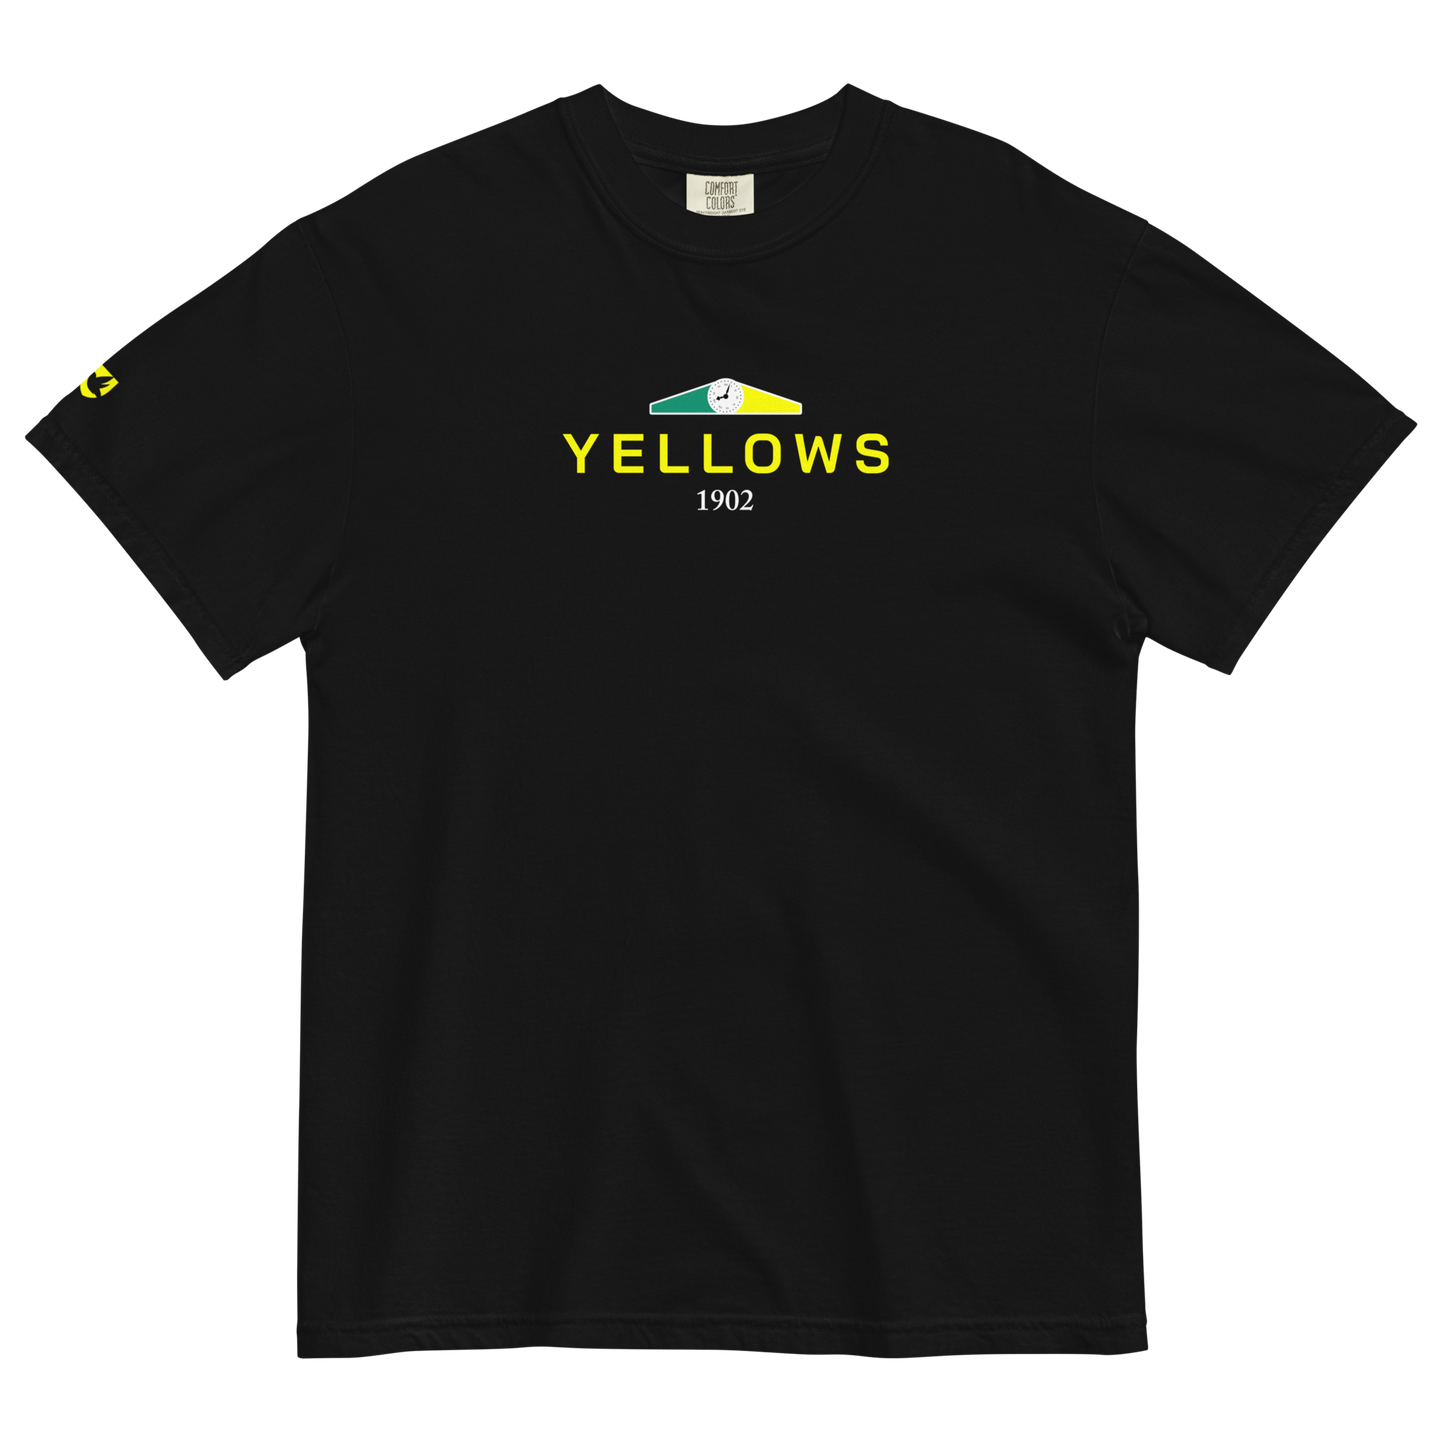 Yellows Tee